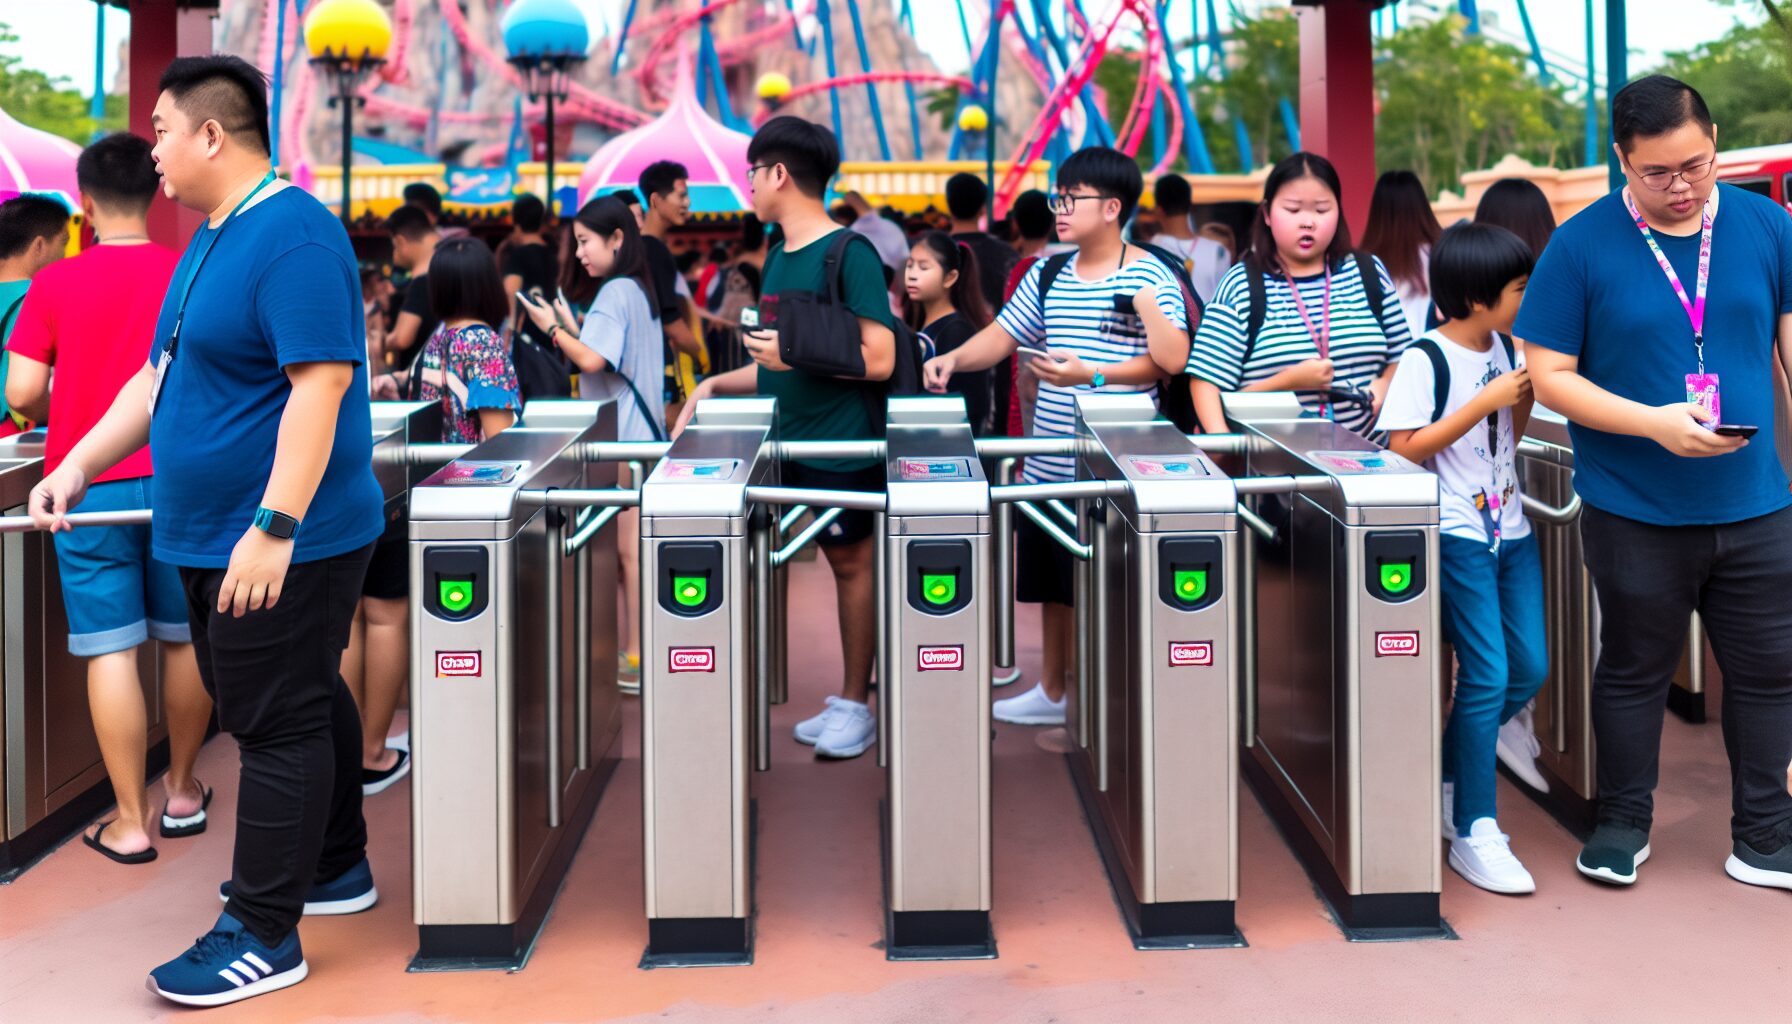 Turnstile barrier gates at the entrance of an amusement park